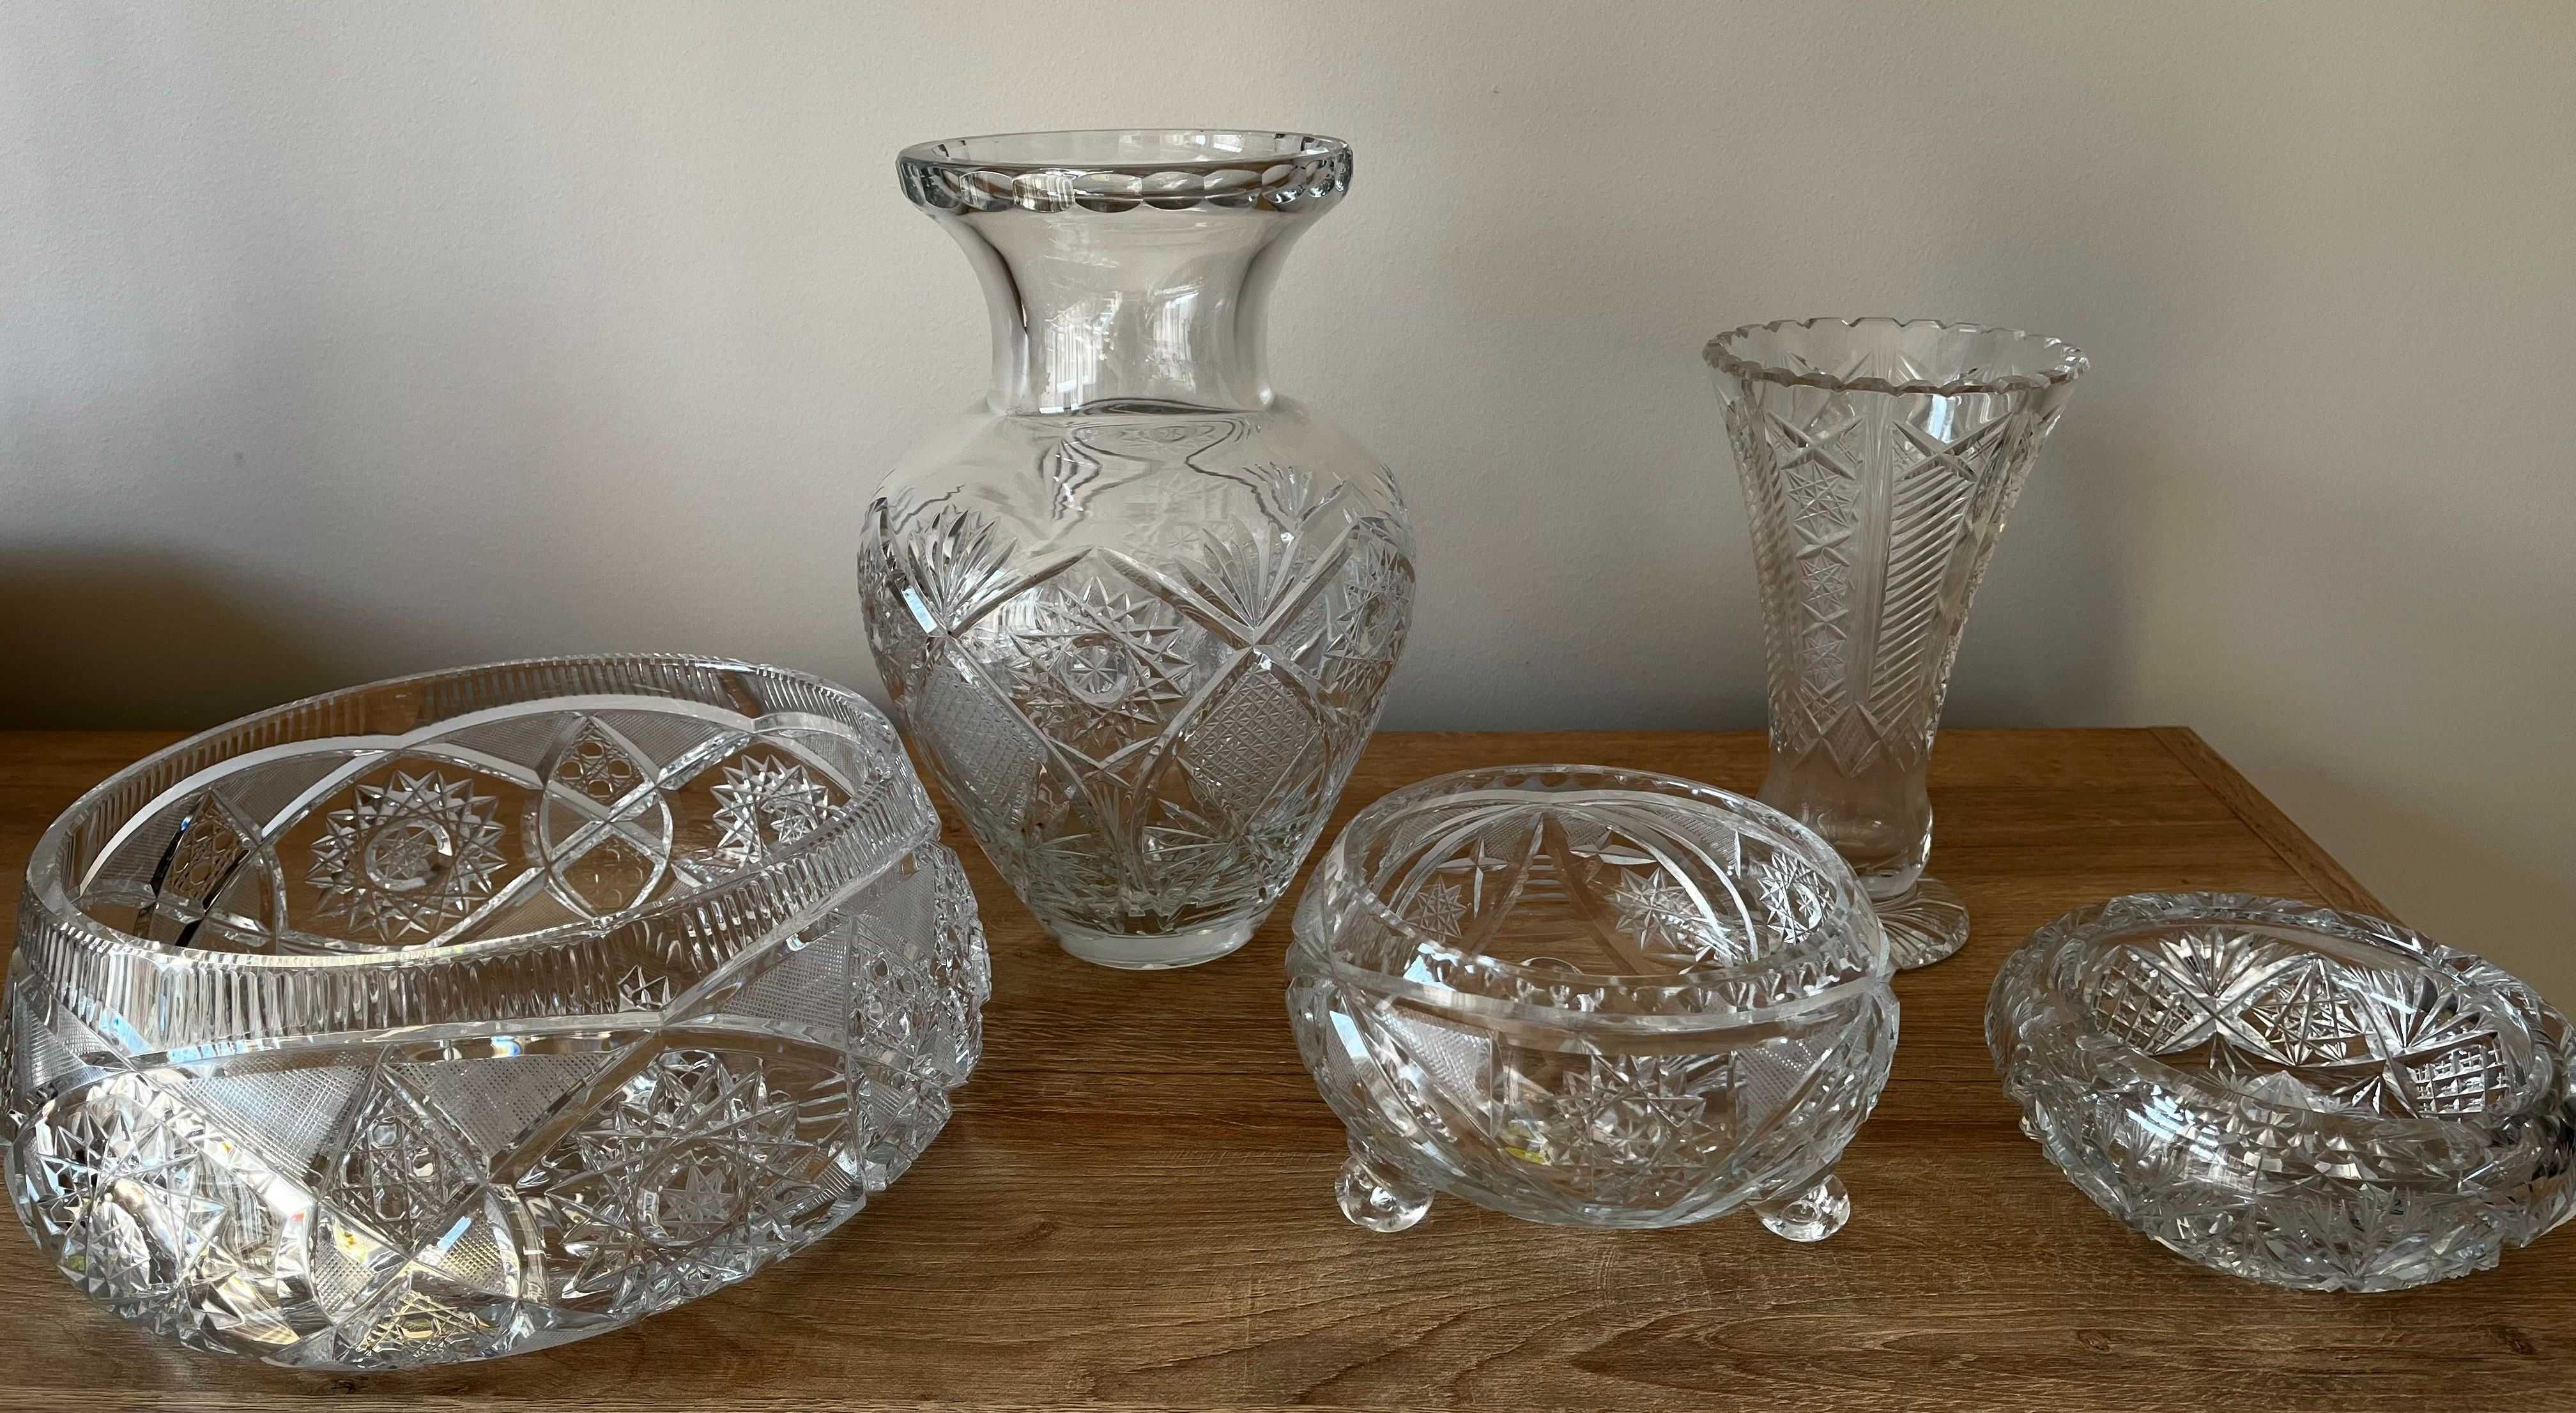 Kryształ - duży wazon